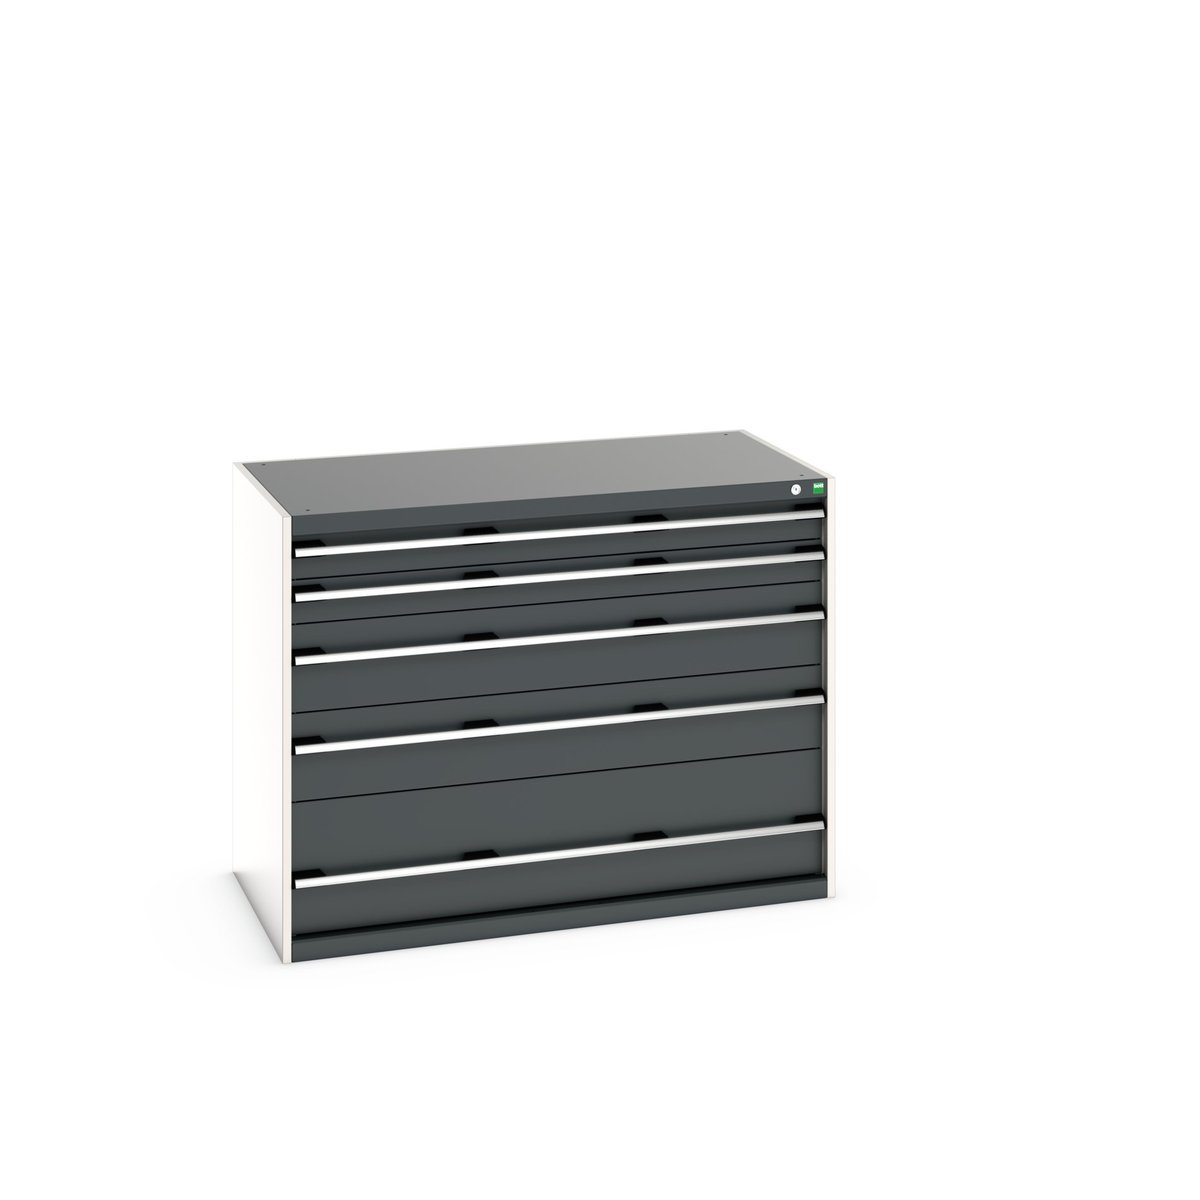 40030092. - cubio drawer cabinet